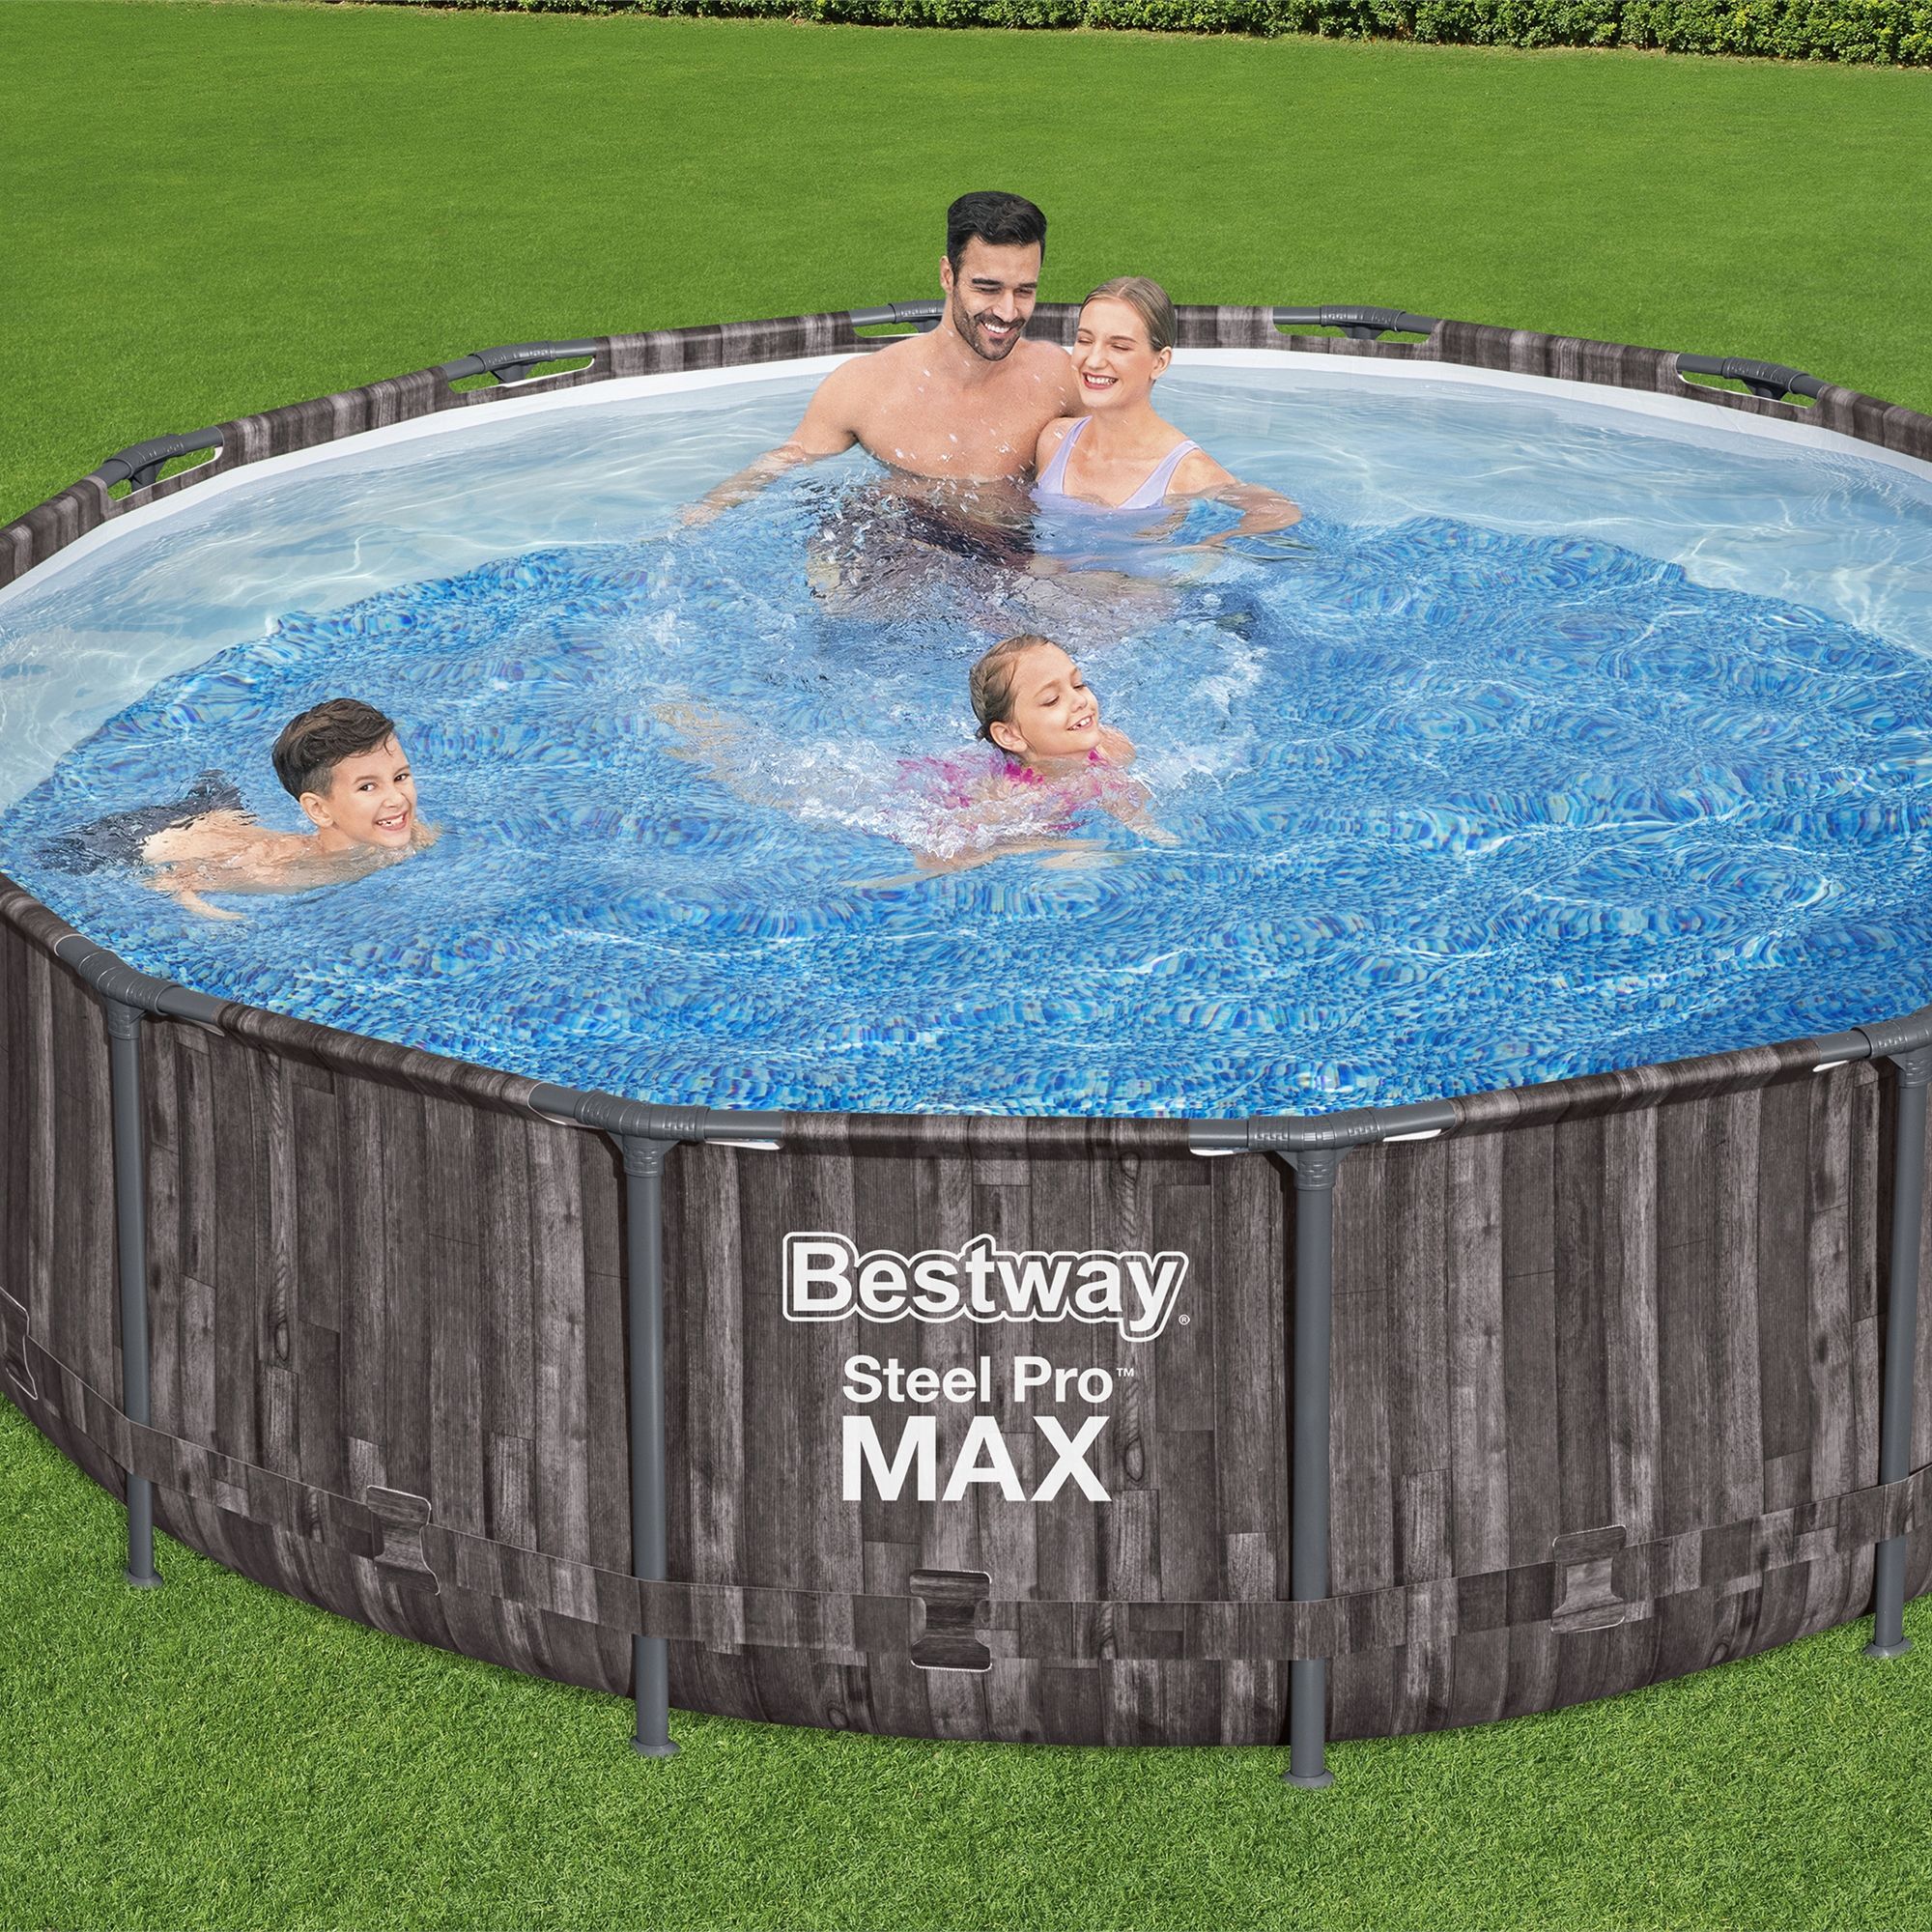 Bestway Steel Pro MAX™ Wood Effect Polyvinyl chloride (PVC) & steel Pool (W) 4.27m x (L) 4.27m